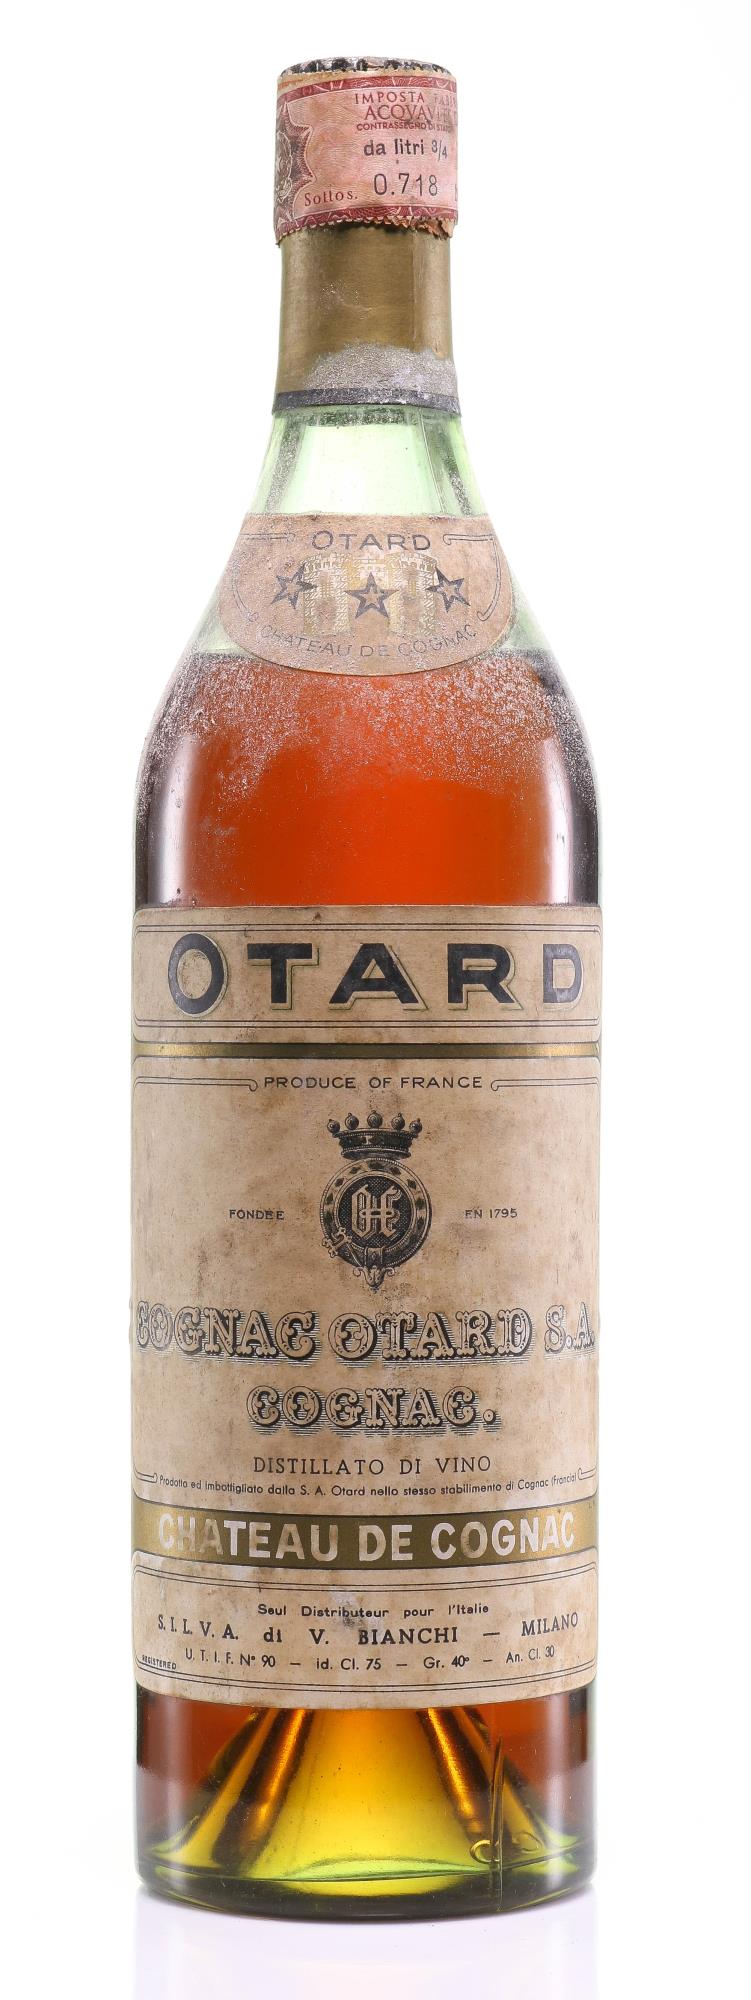 Baron Otard 3 Star Special Cognac - Ugni Blanc, Italy - Rue Pinard